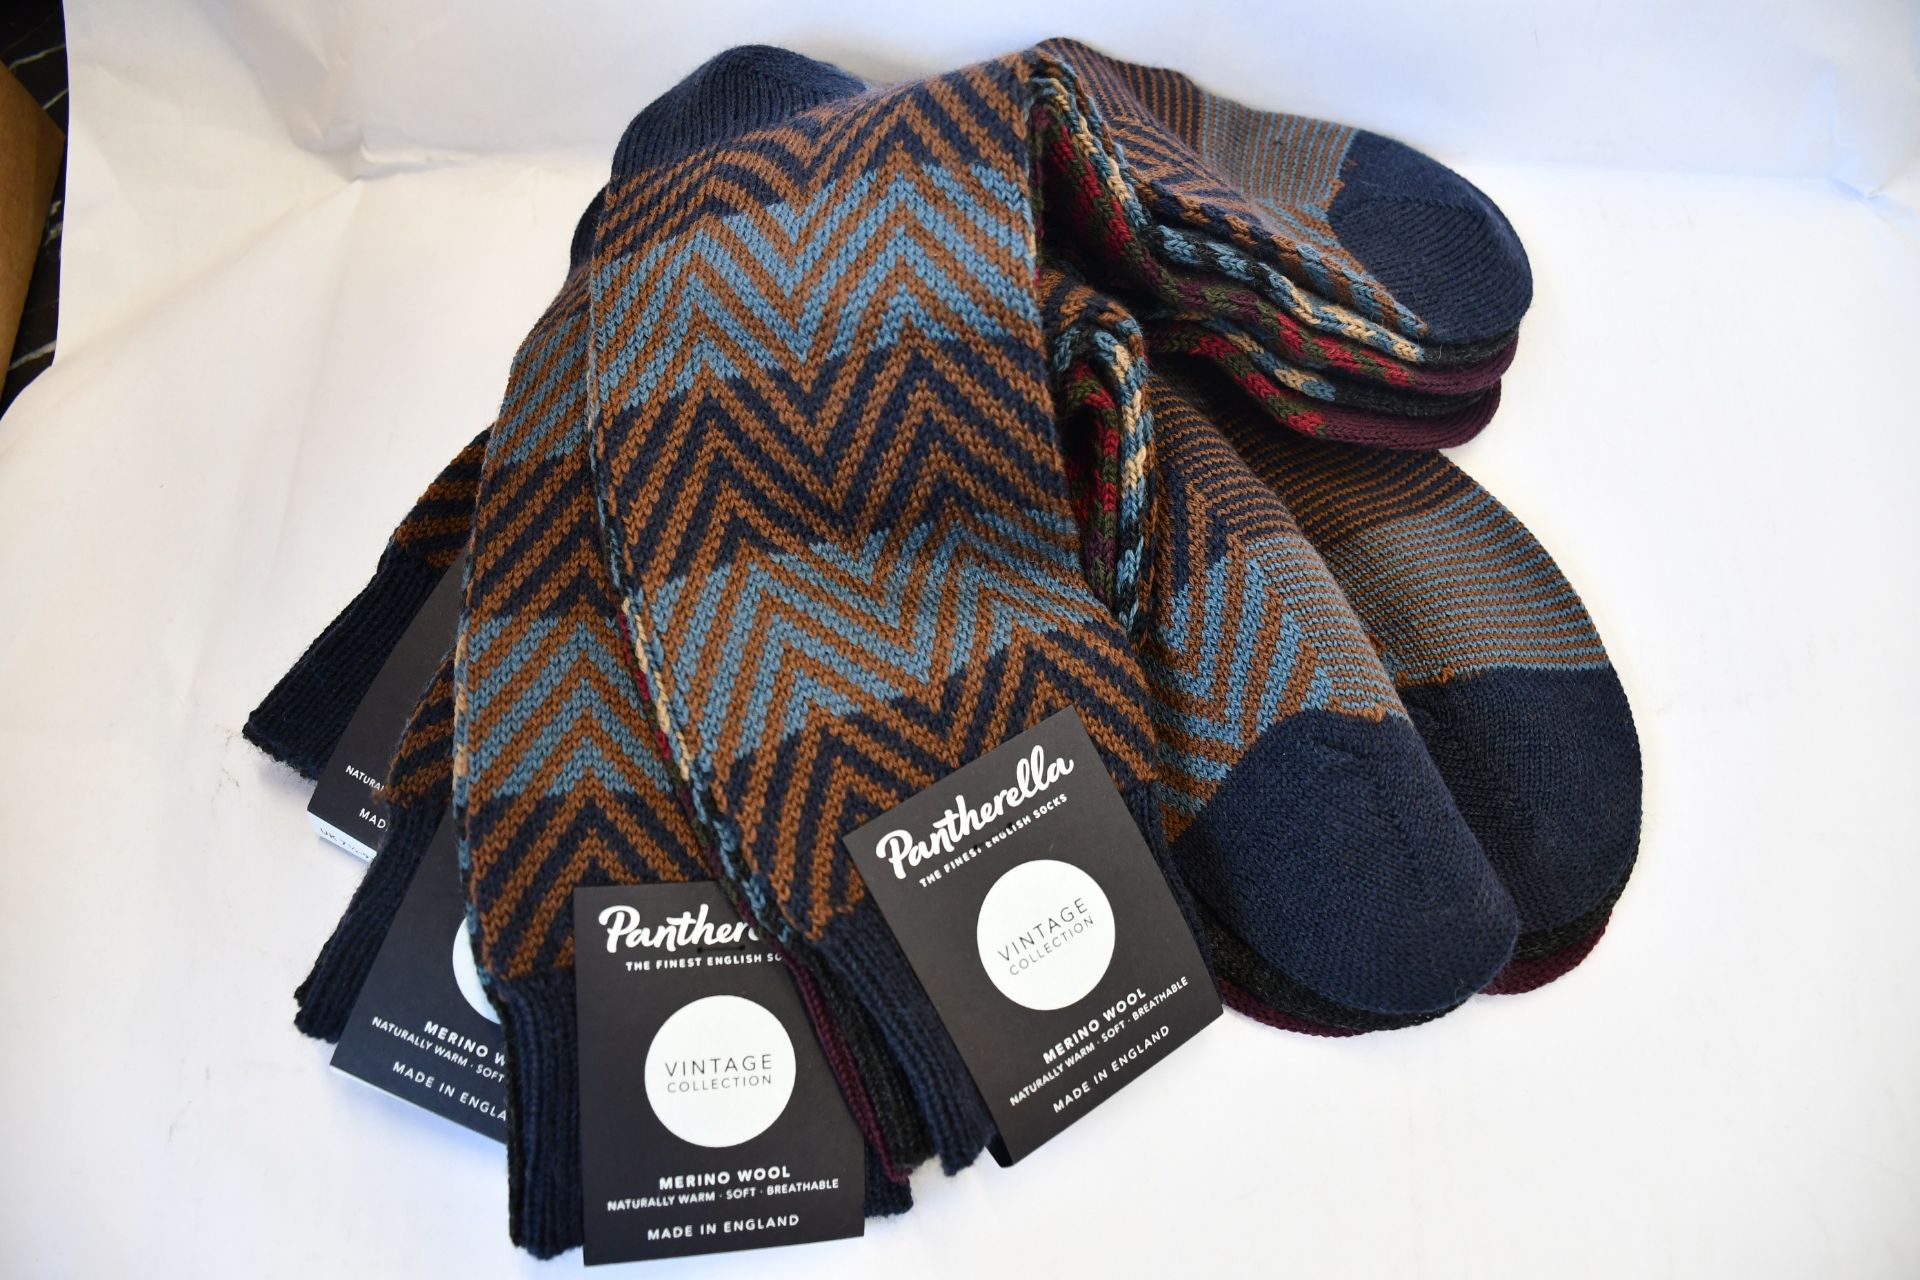 Eight pairs of as new Pantherella Hartwell merino wool socks.